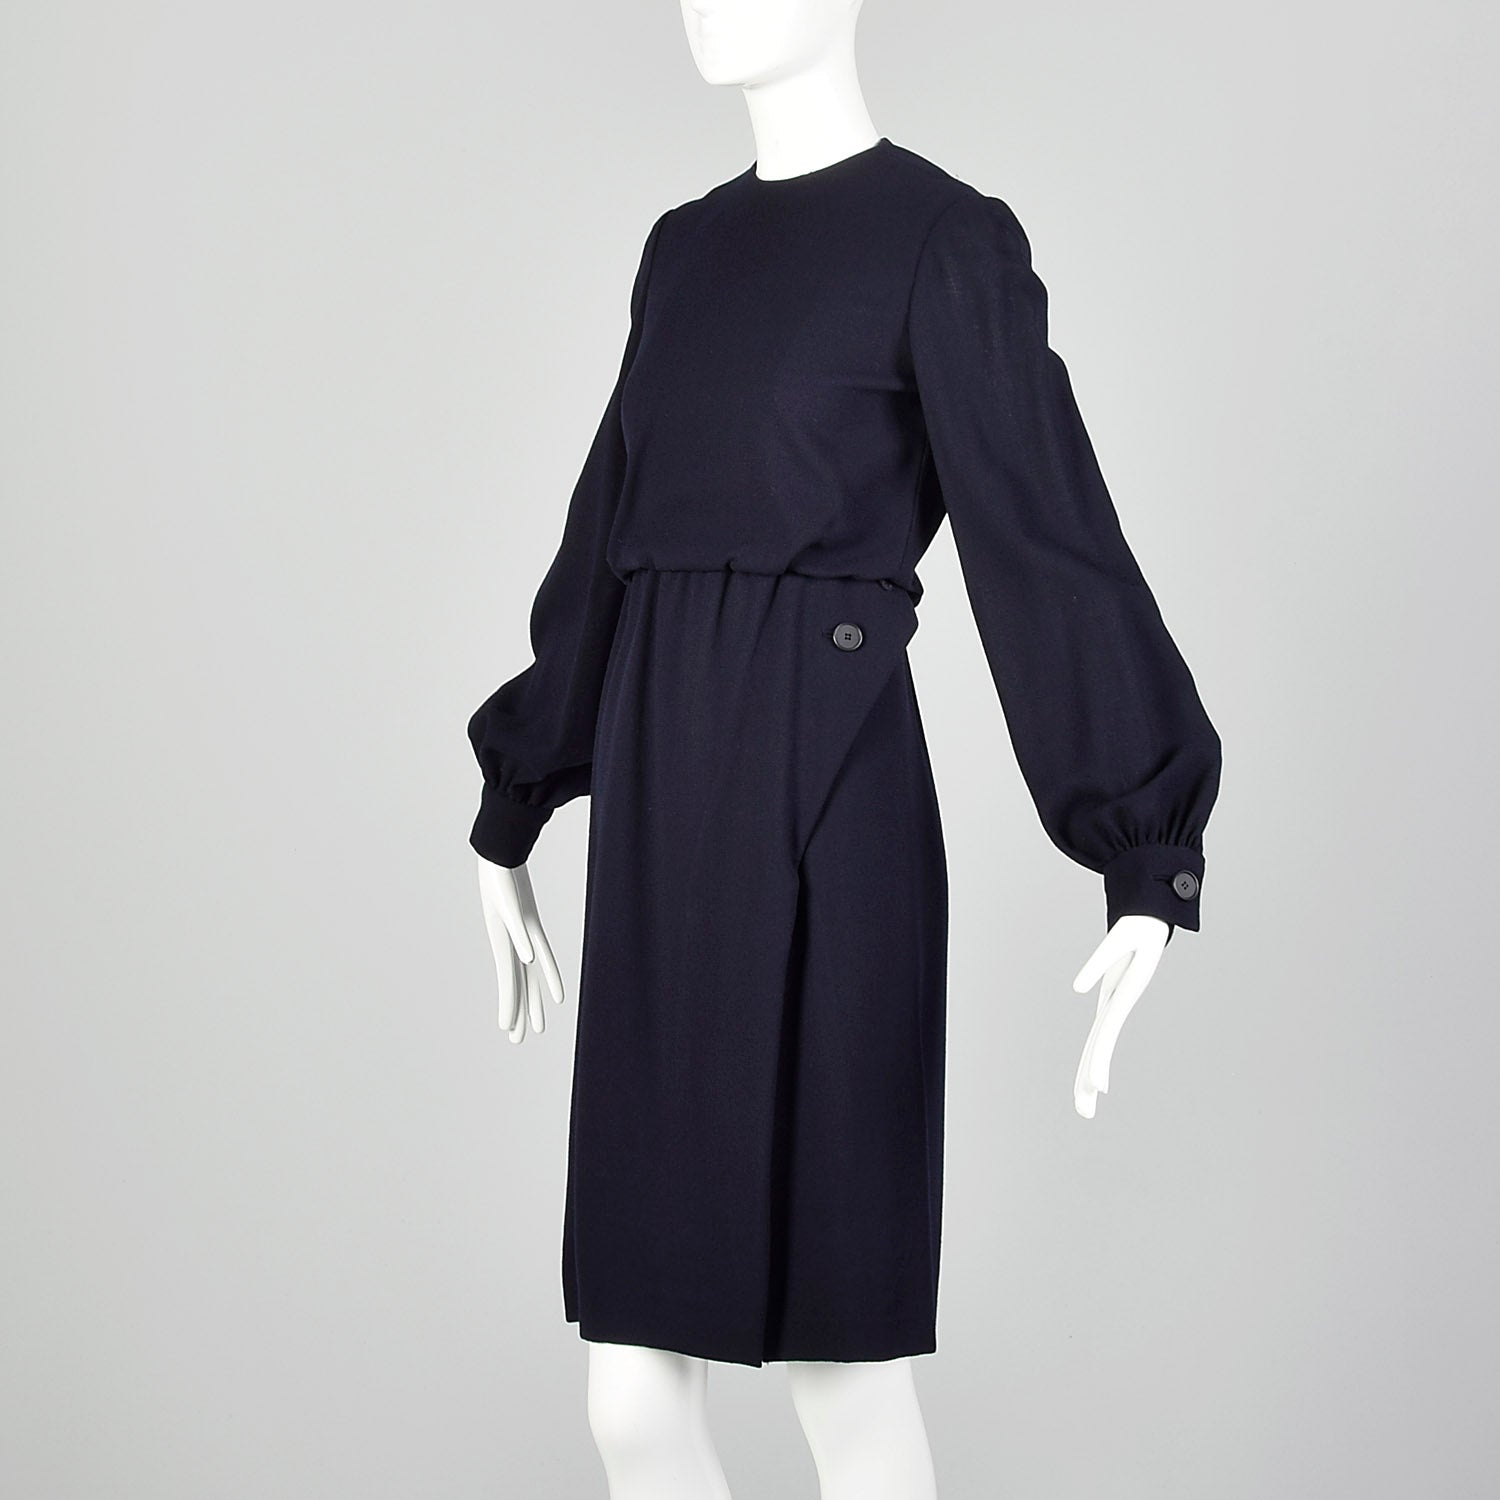 Small Geoffrey Beene 1960s Navy Blue Dress